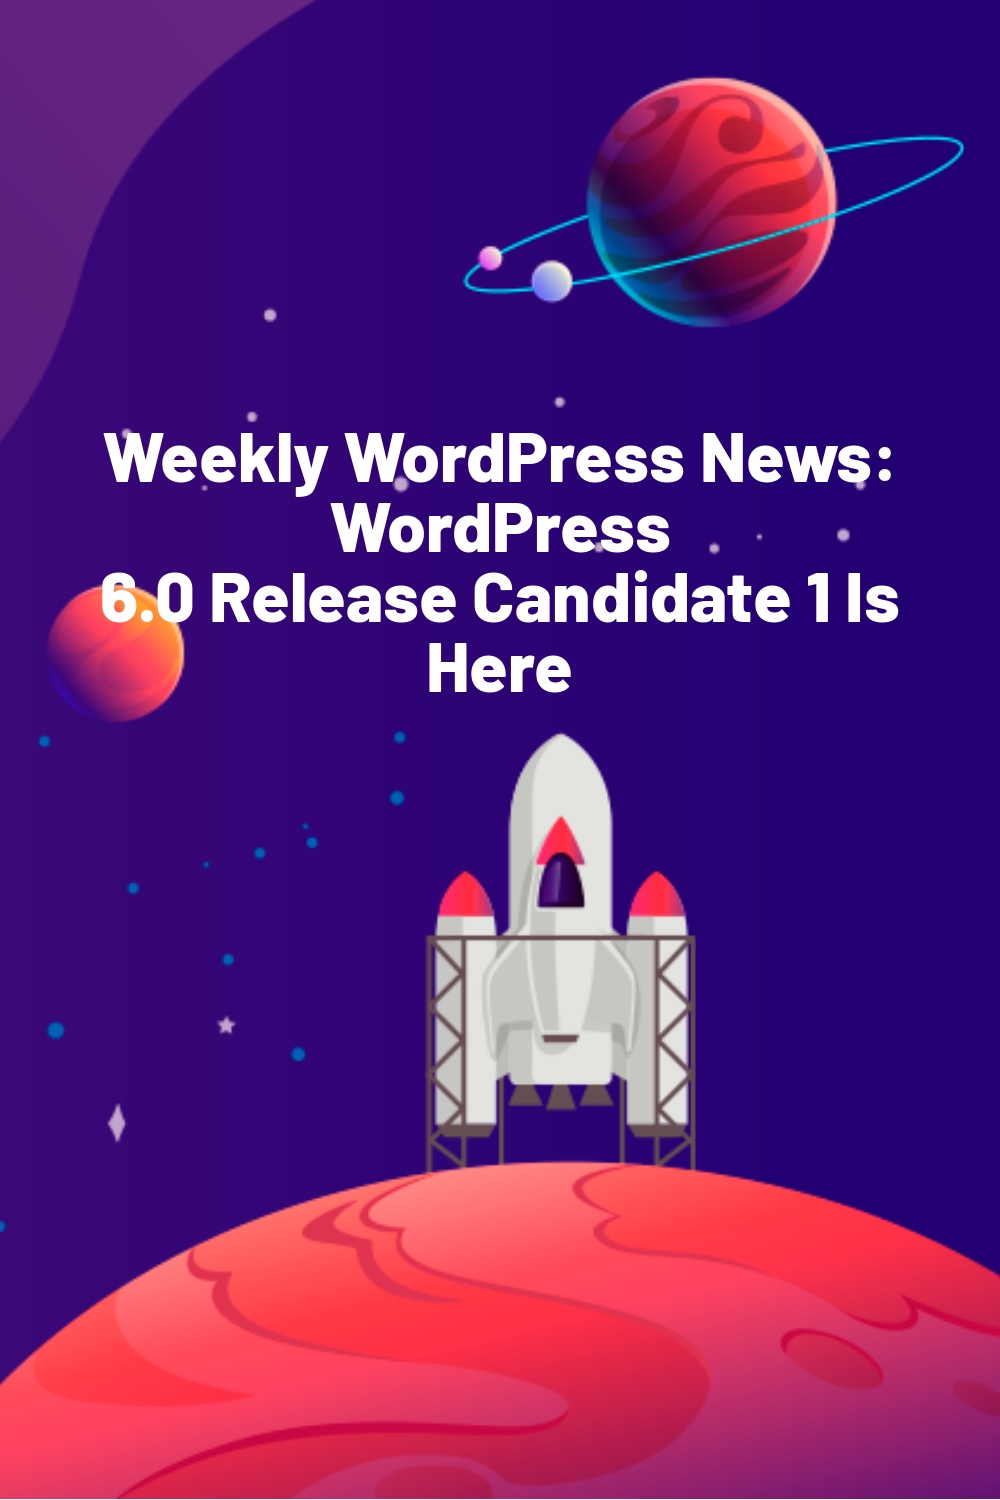 Weekly WordPress News: WordPress 6.0 Release Candidate 1 Is Here